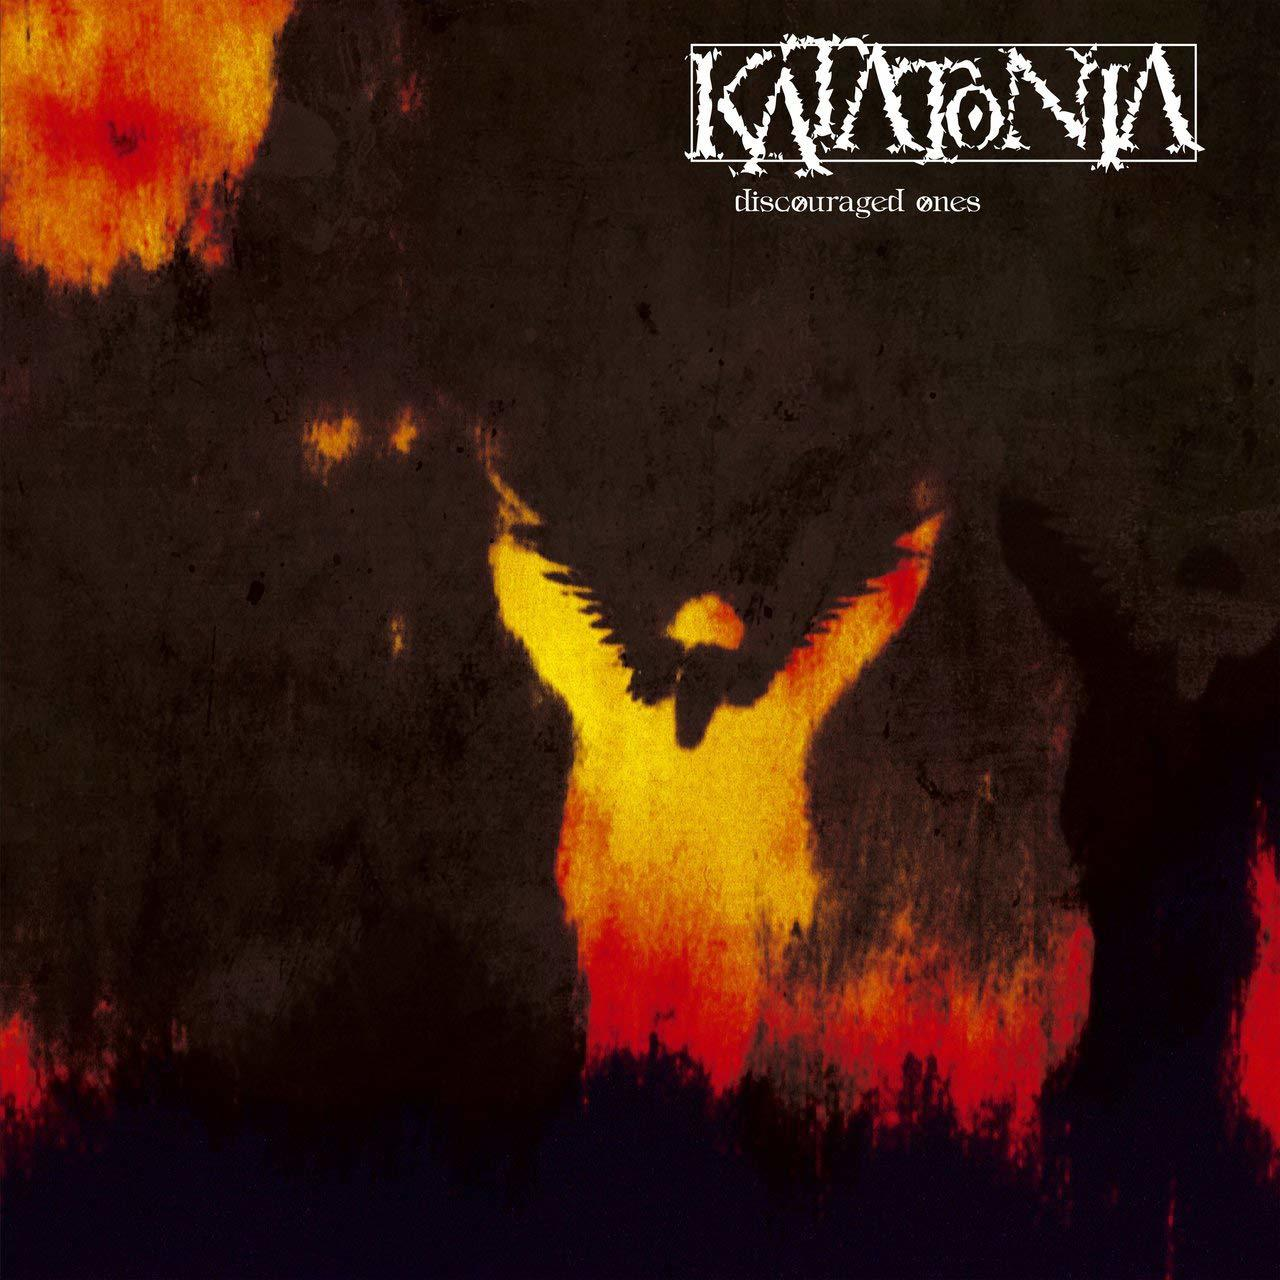 Ones Discouraged (Vinyl) Katatonia - -